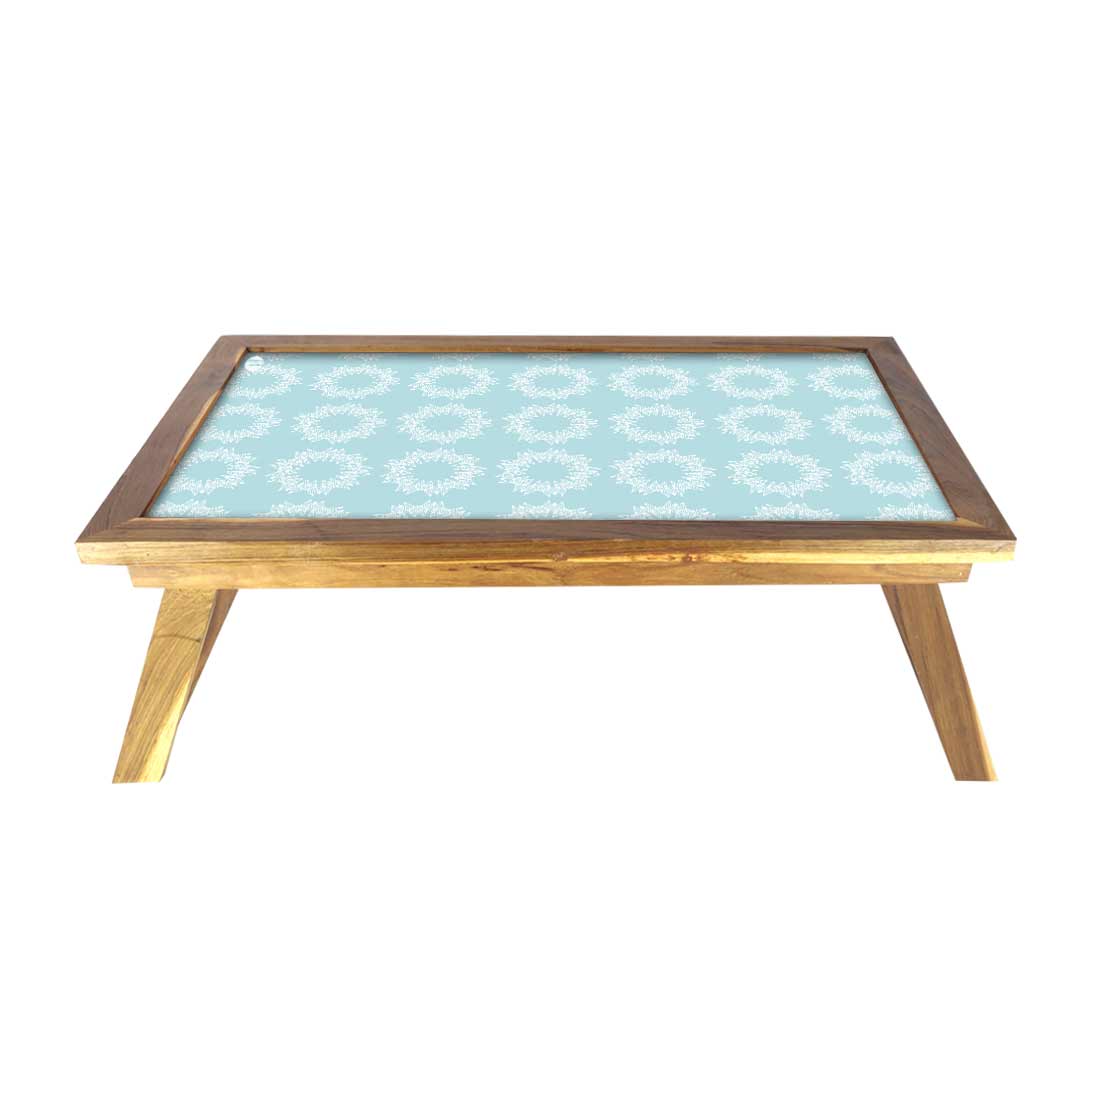 Nutcase Folding Laptop Table For Home Bed Lapdesk Breakfast Table Foldable Teak Wooden Study Desk - Pattern Design Nutcase